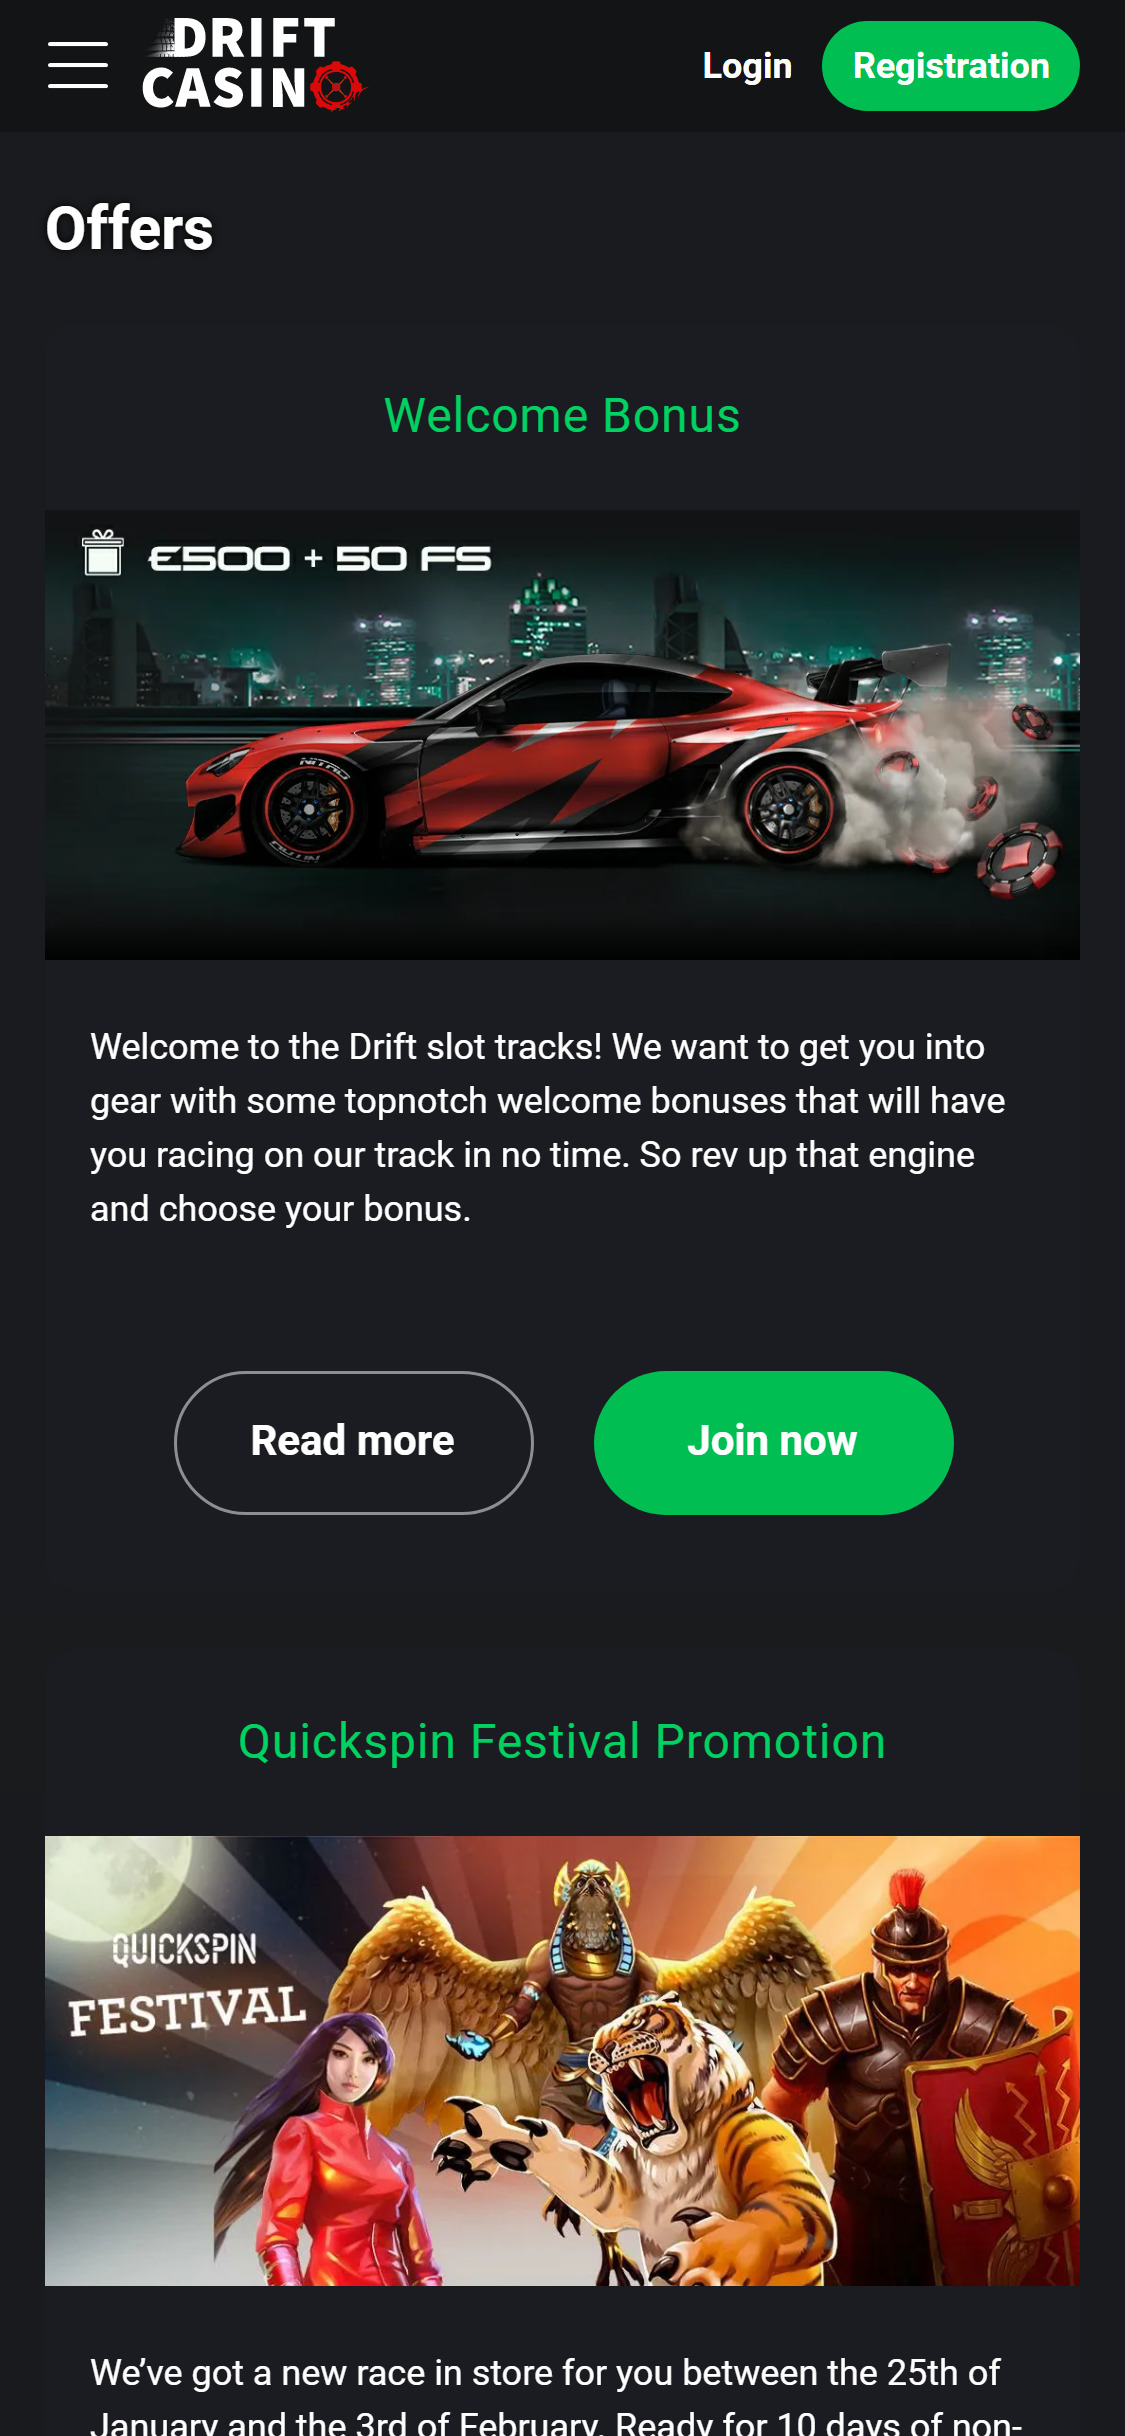 Casino Drift Mobile No Deposit Bonus Review